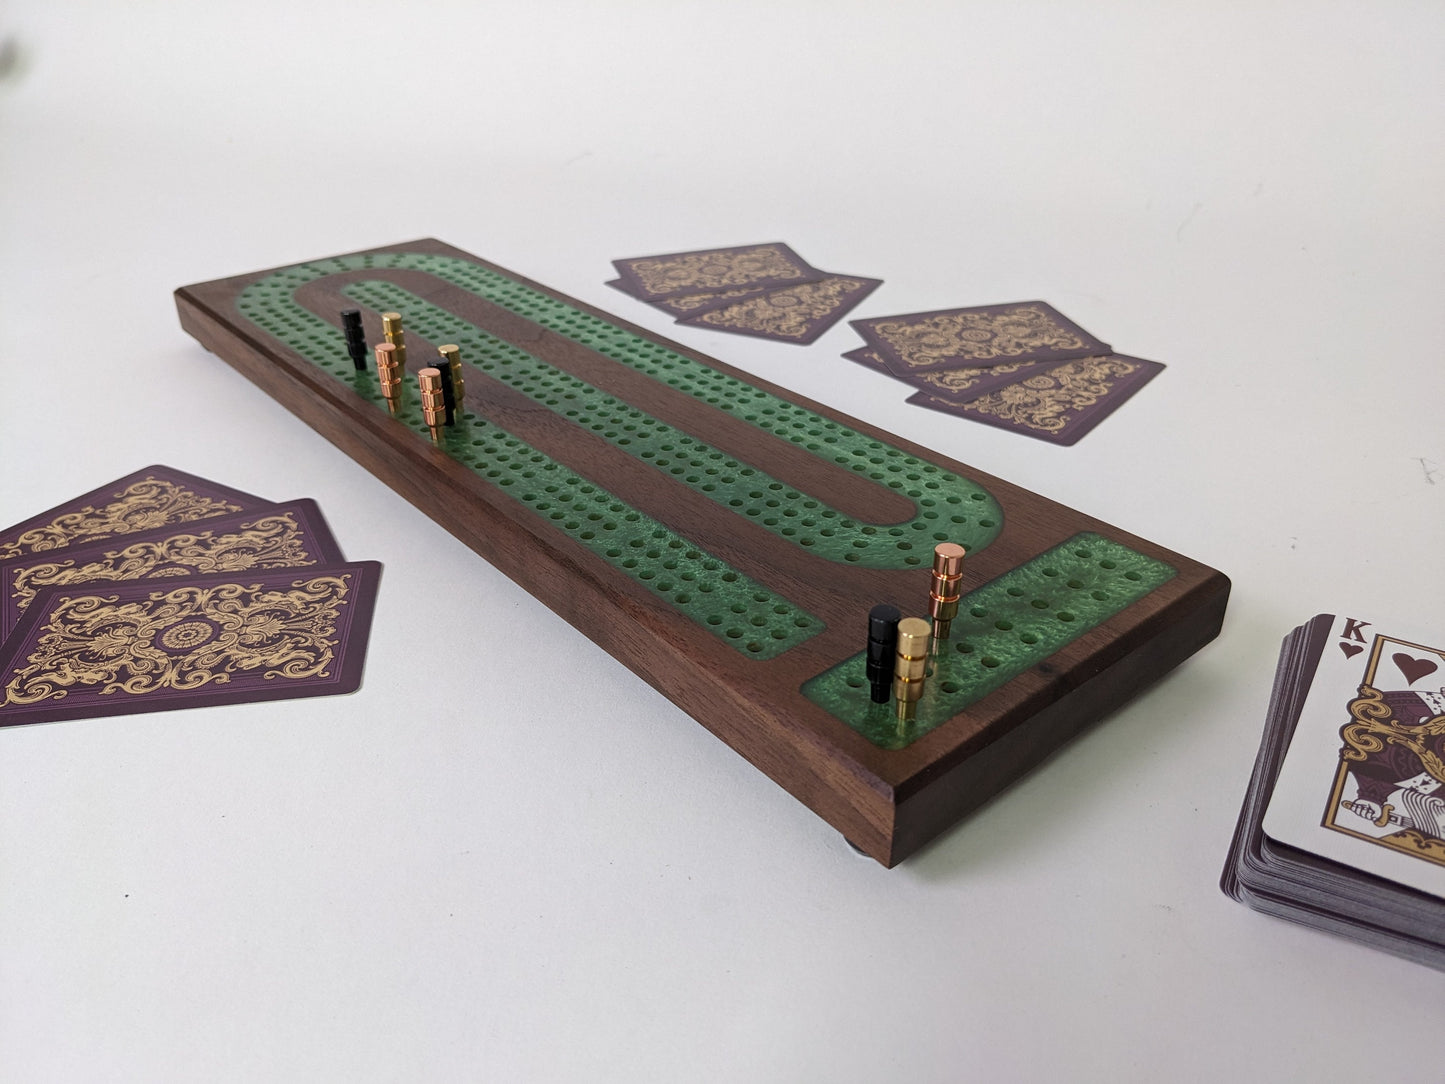 Premium Cribbage Board - Sage Green Resin Inlay